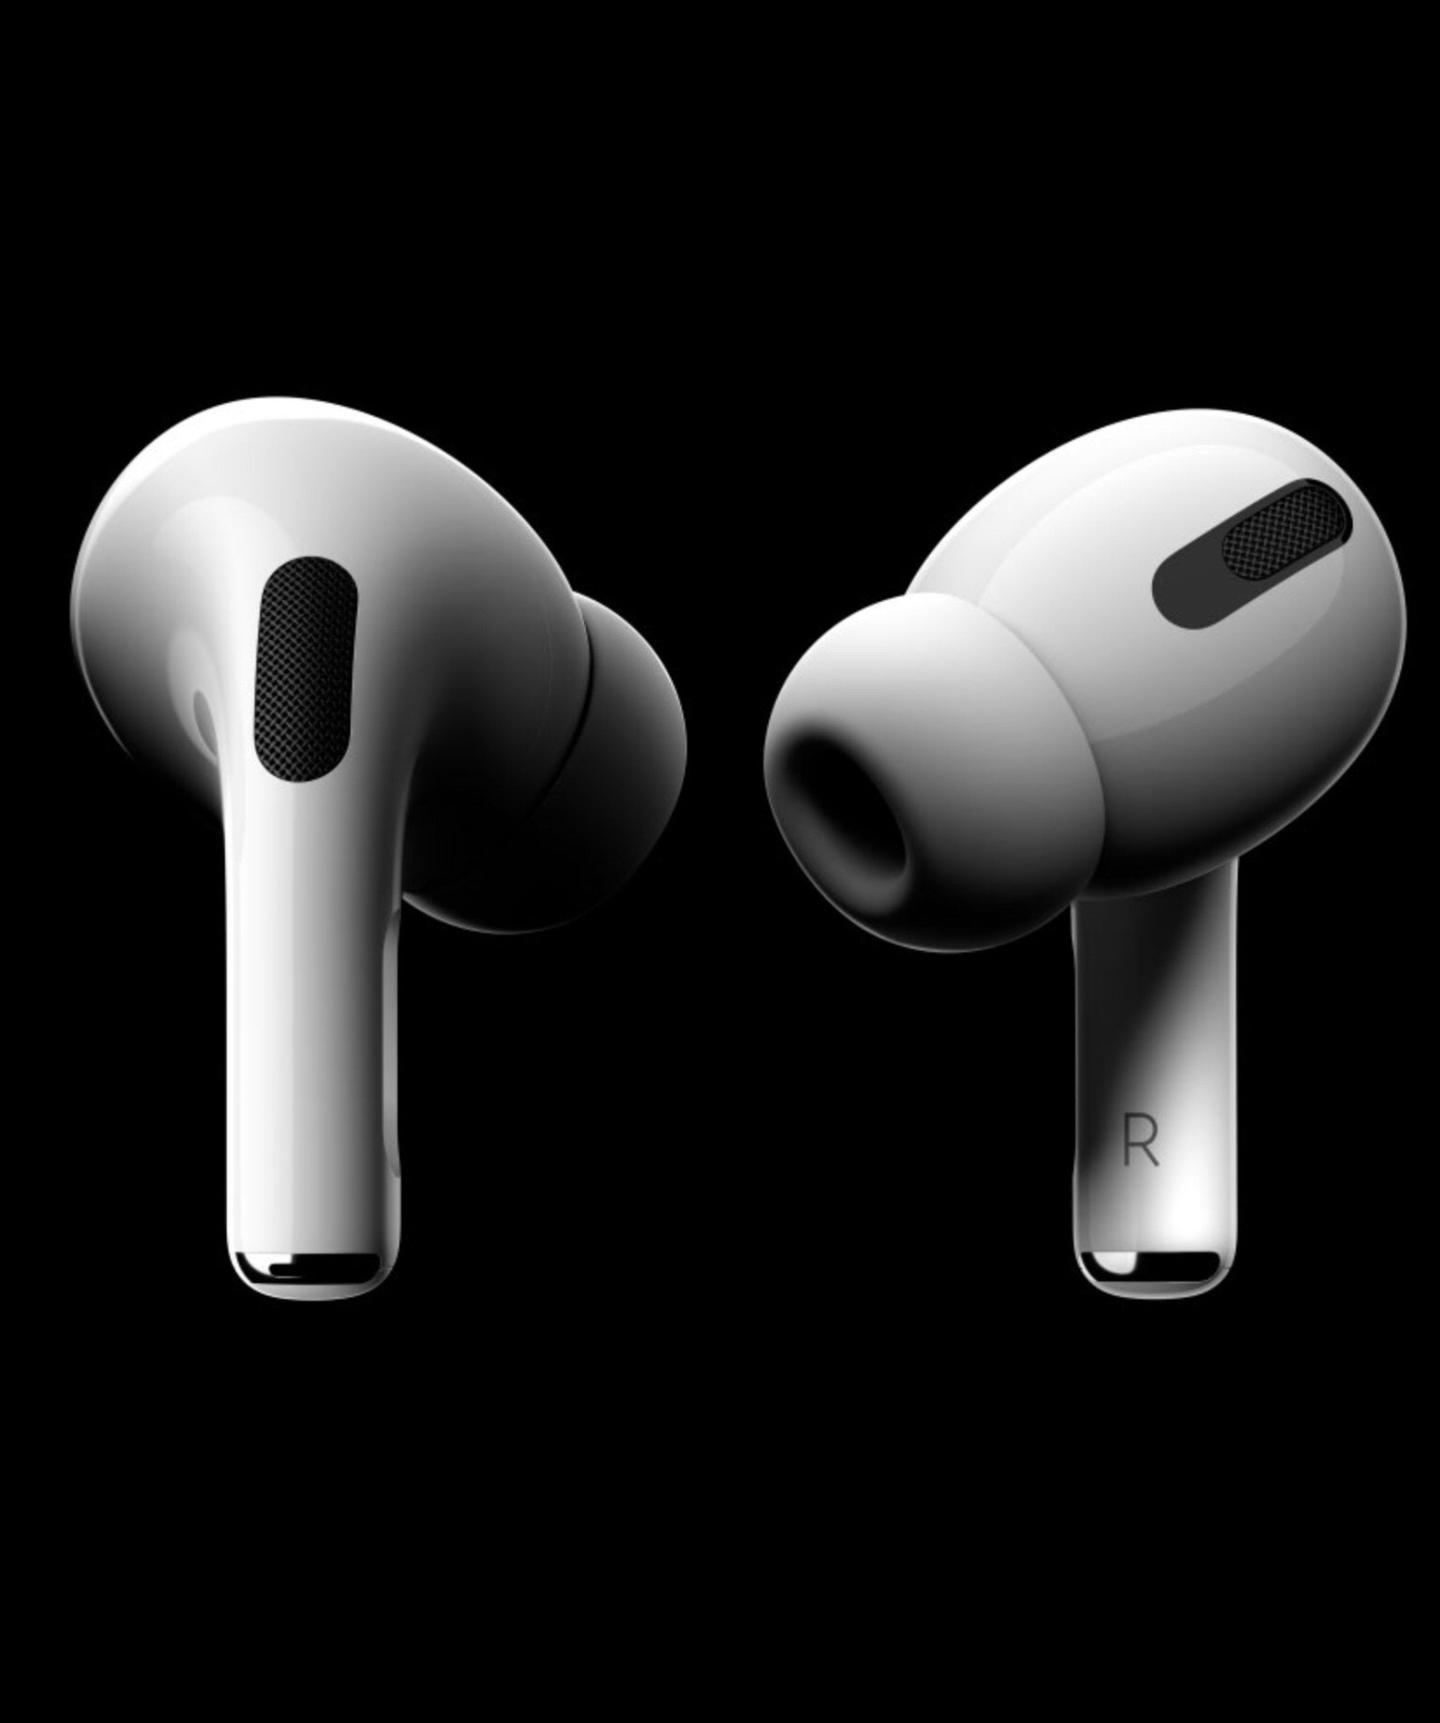 B級特価送料無料 Apple airpods pro 両耳 1台のみ即納可能|家電 